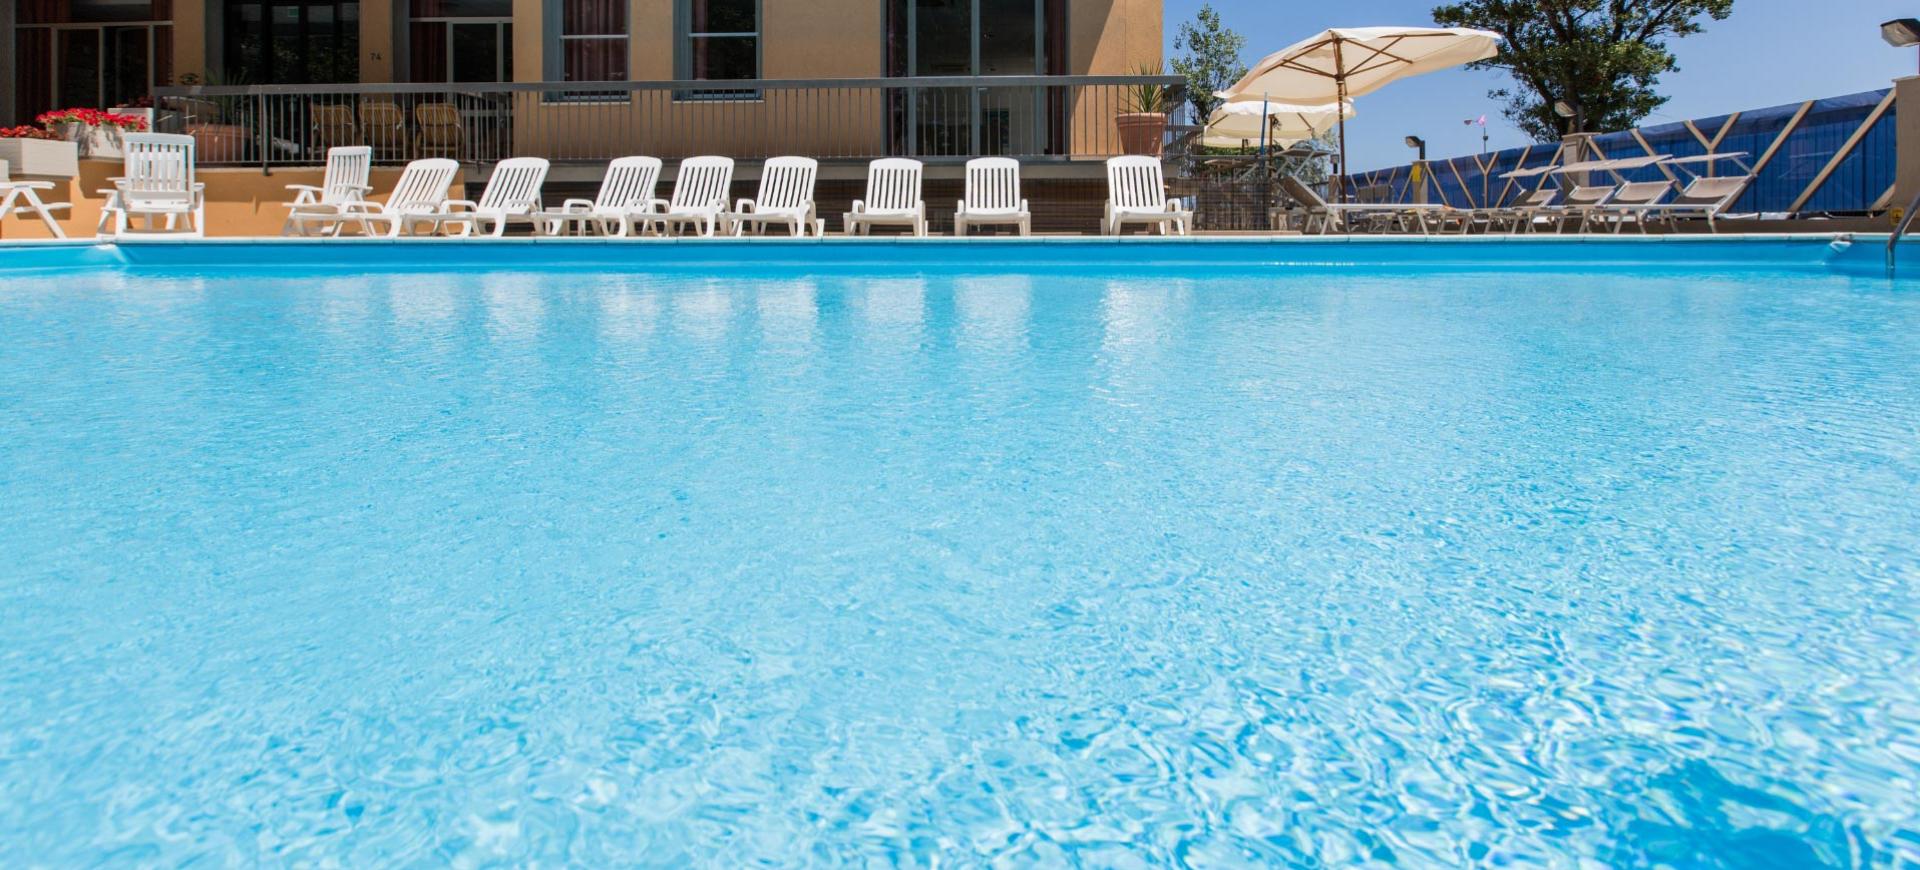 hotelatlasrimini en swimming-pool 015